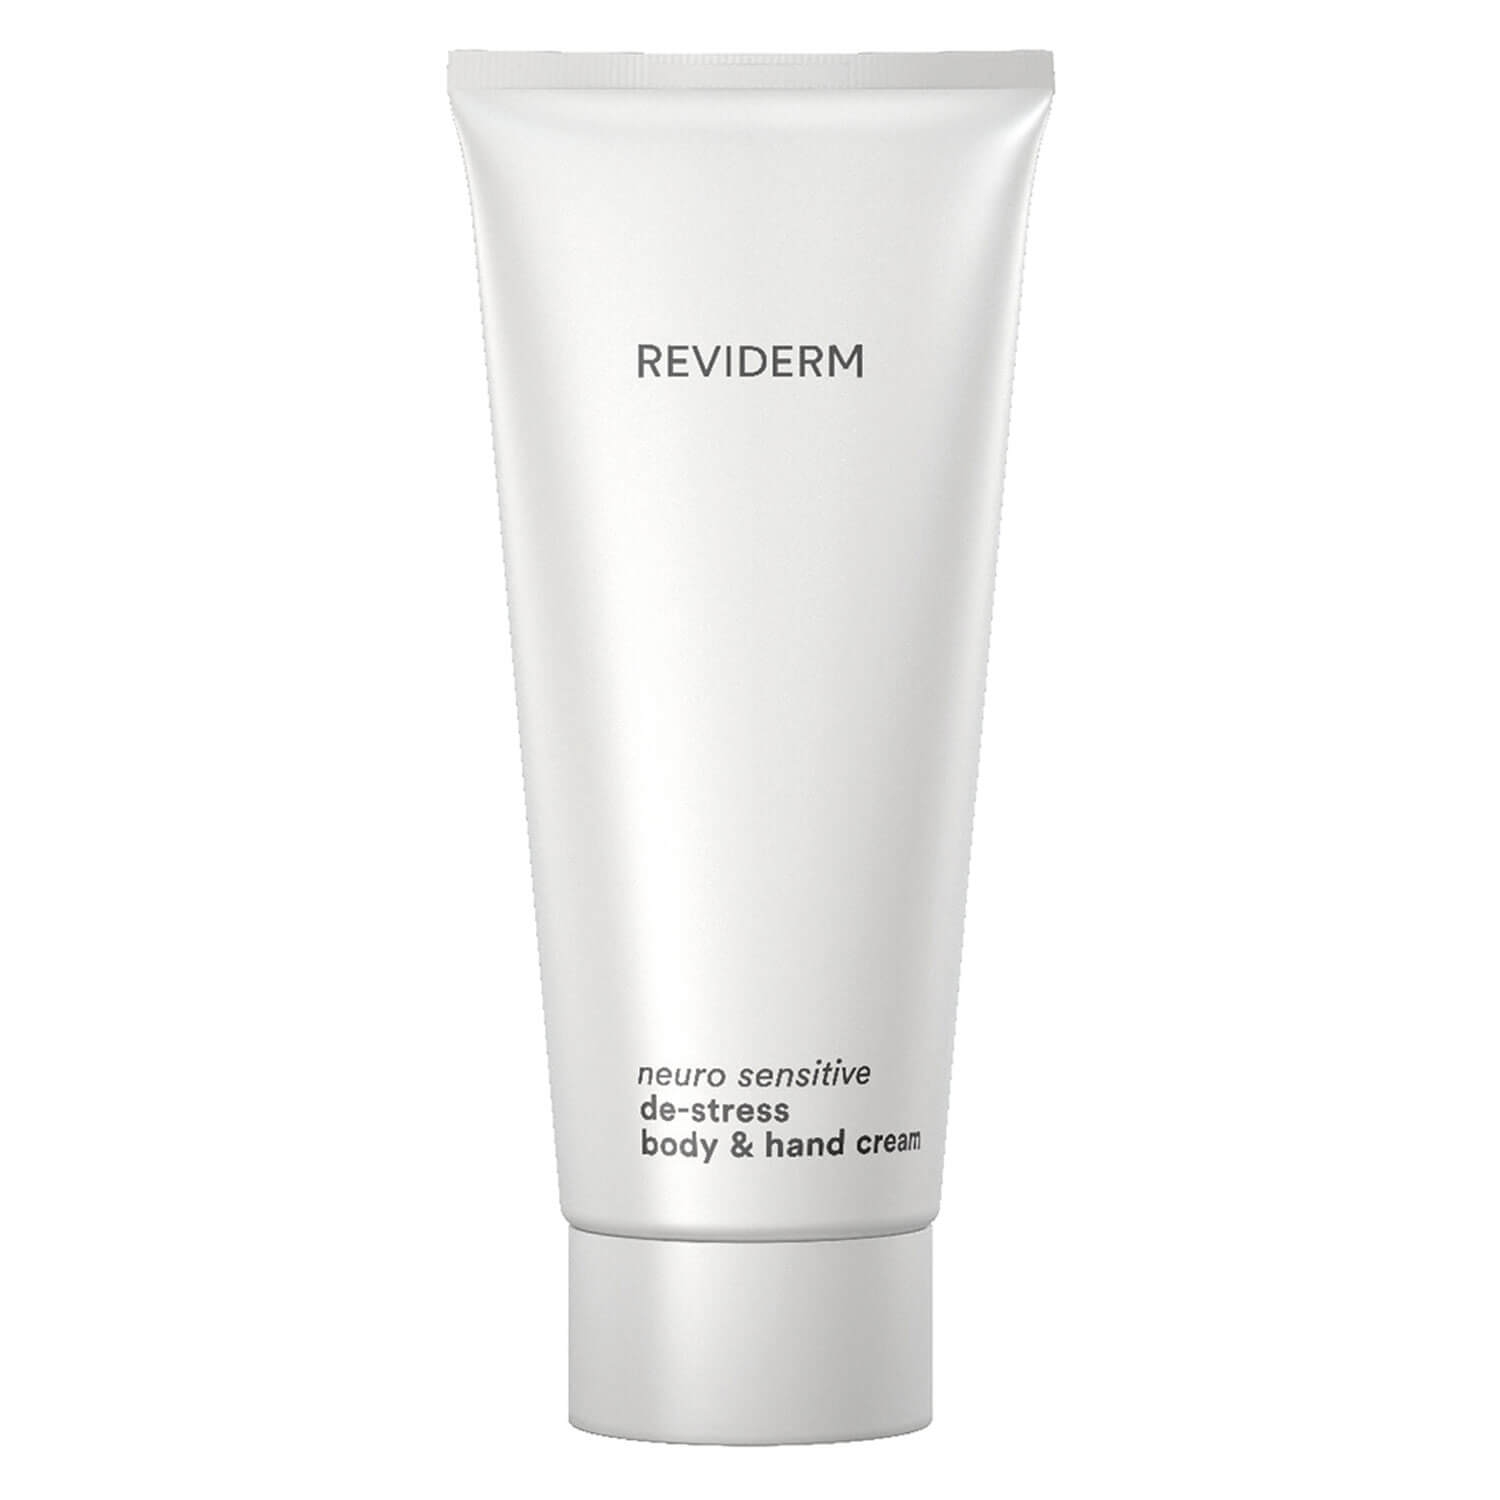 Produktbild von Reviderm Neuro Sensitive - de-stress body & hand cream